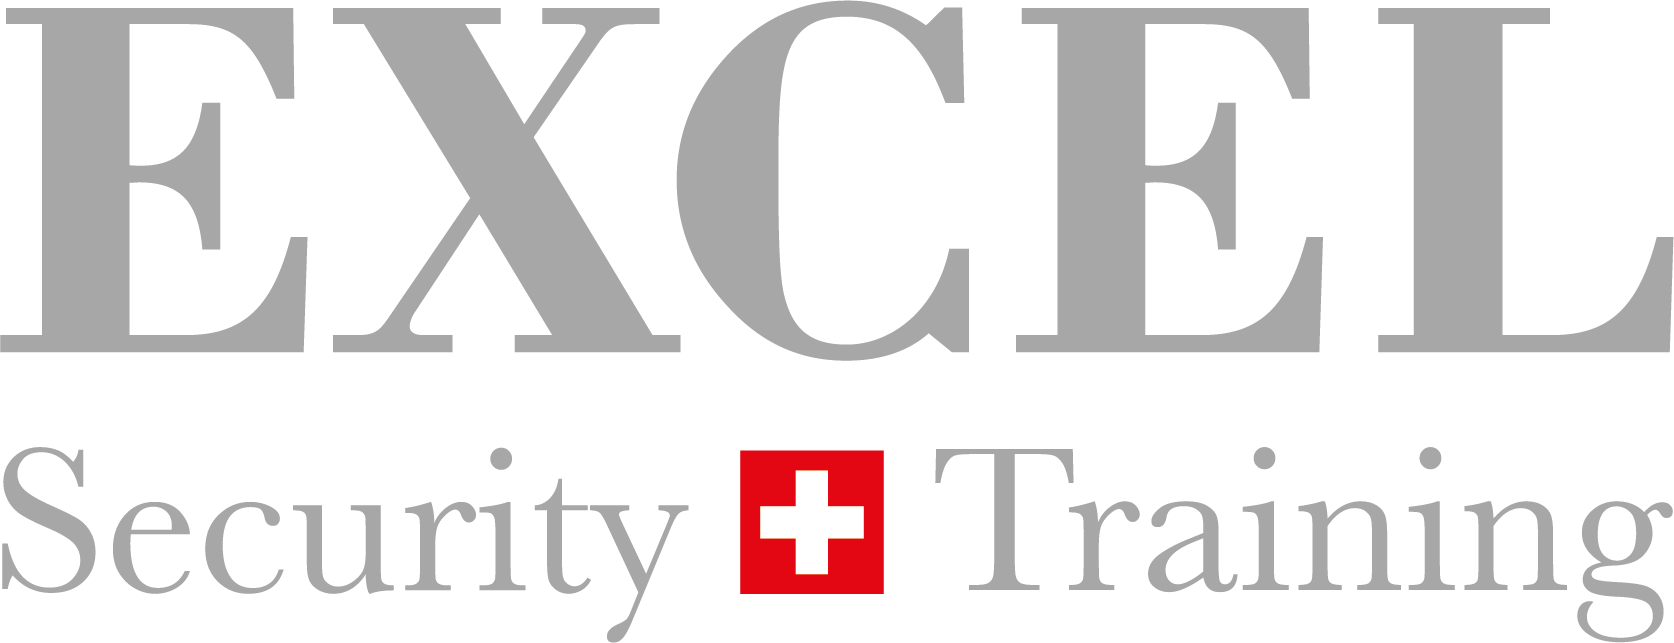 Excel Security Training logo